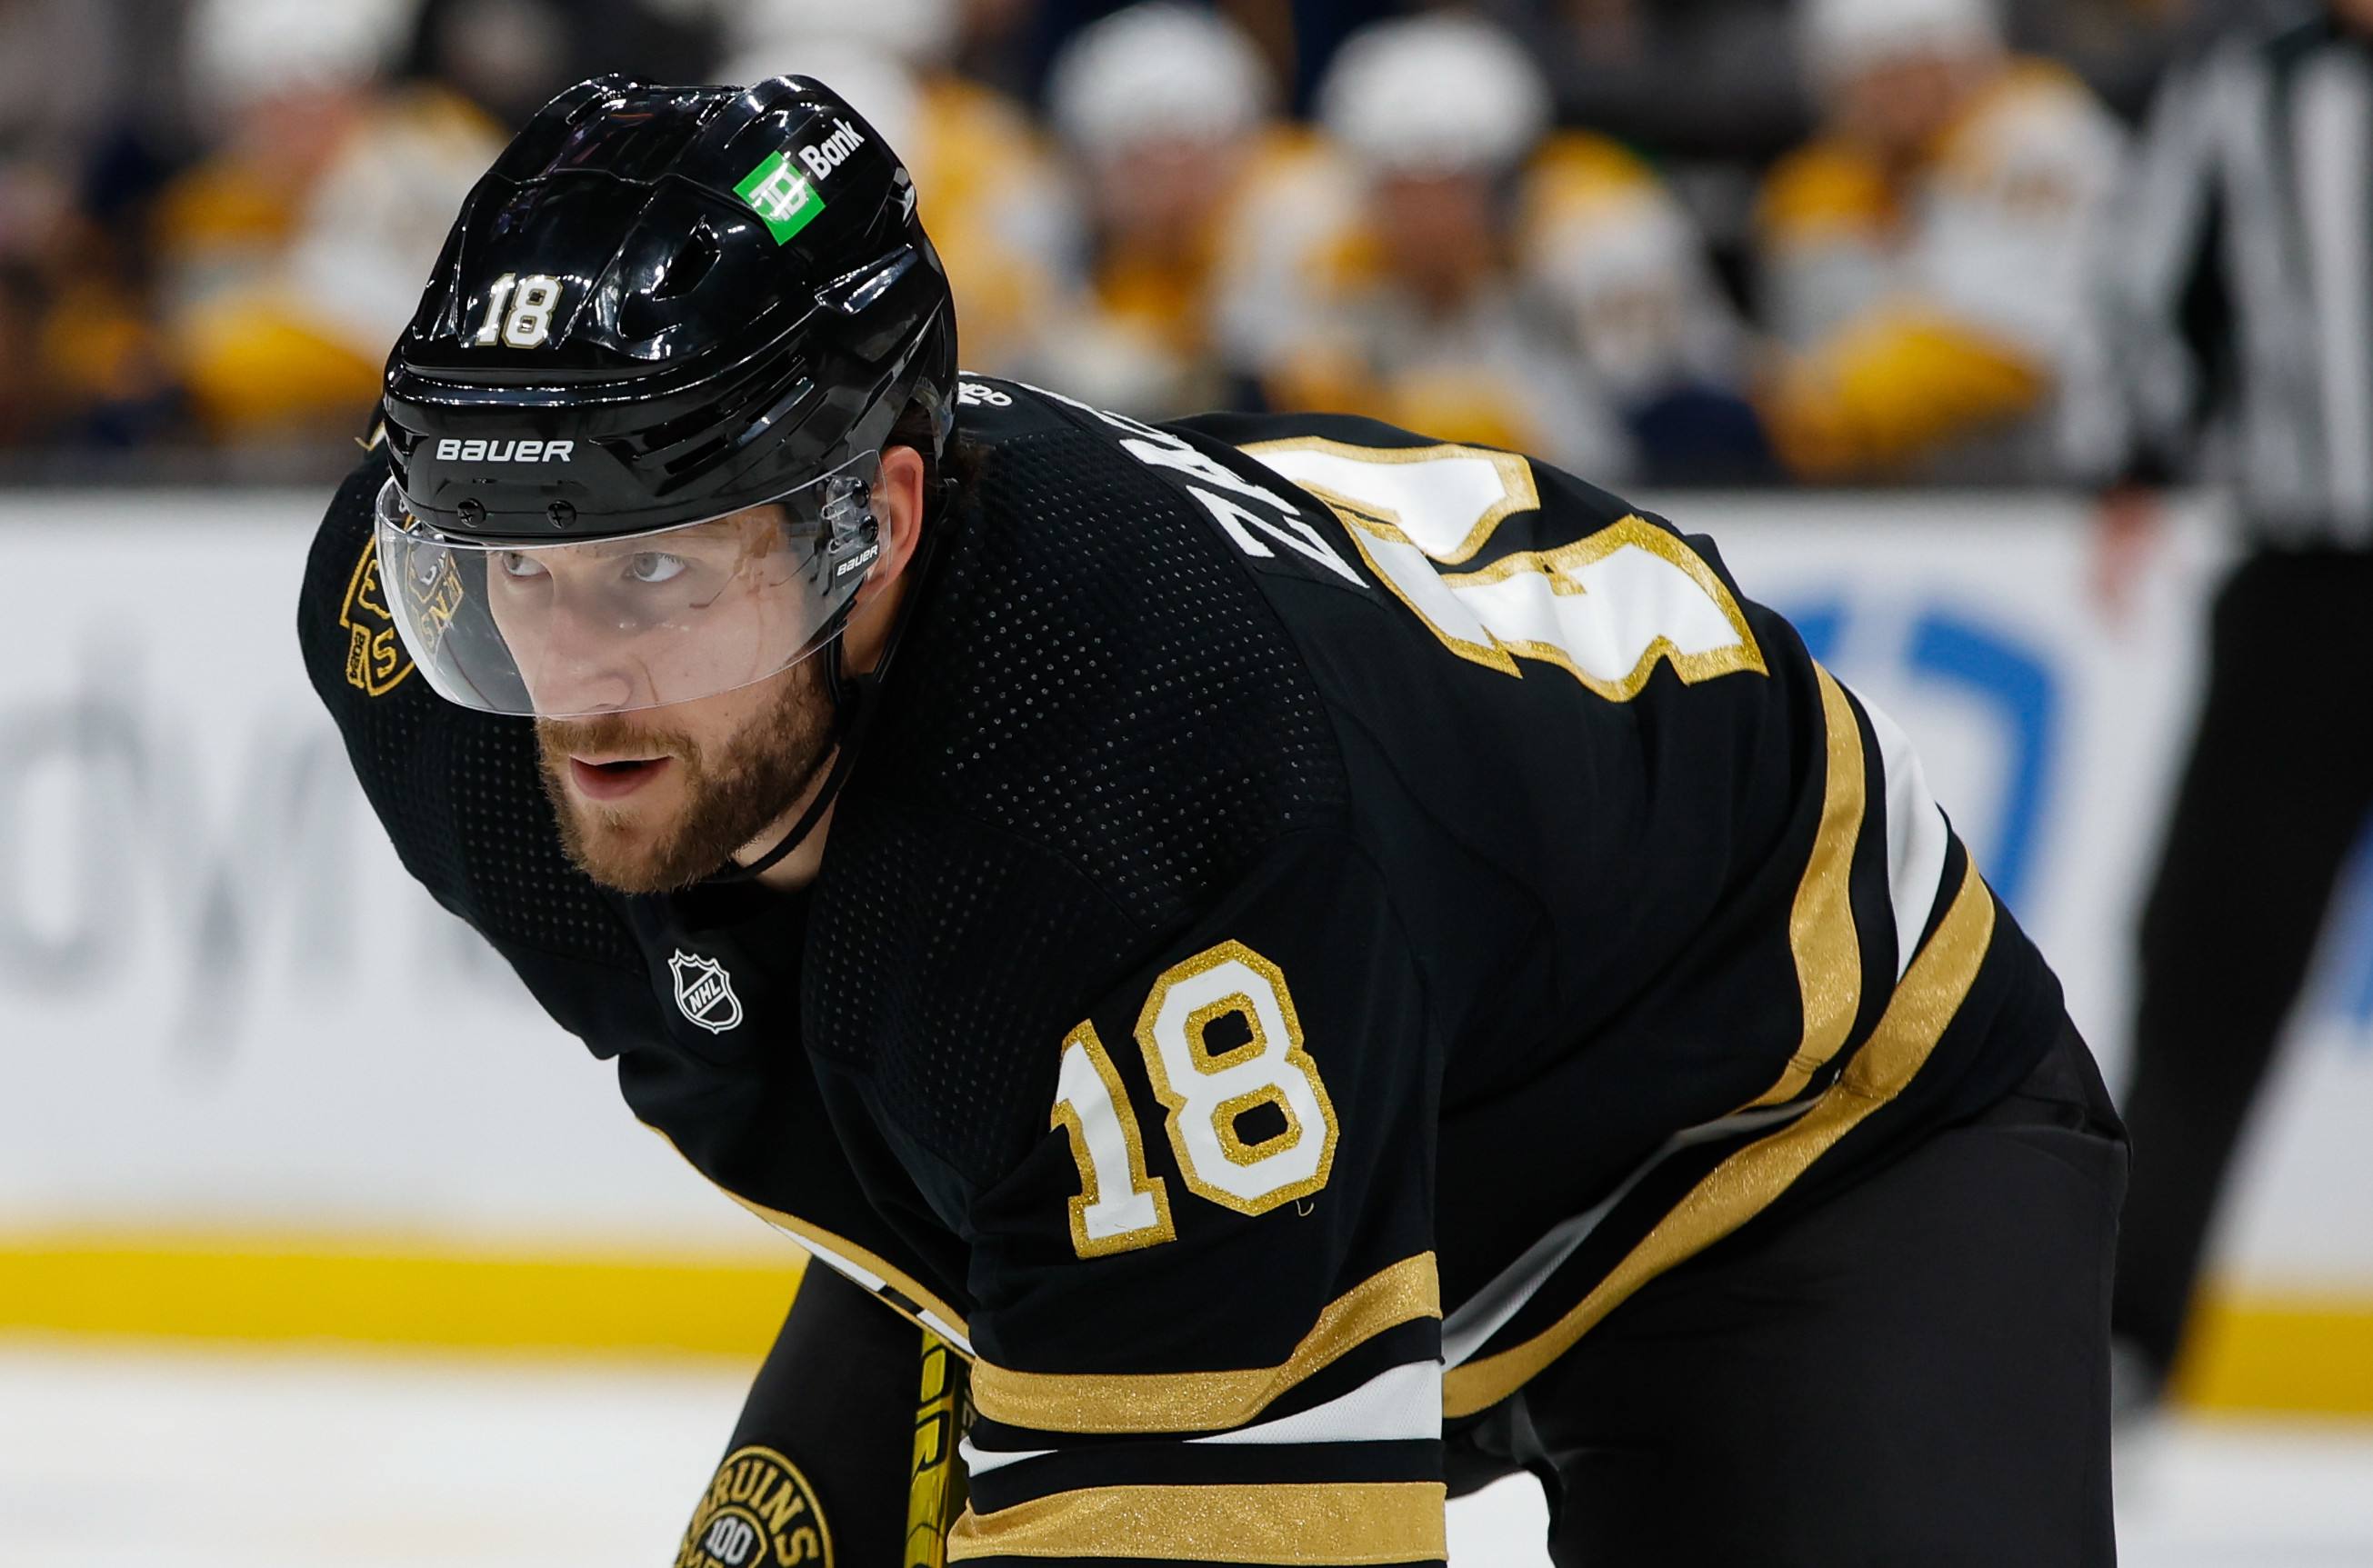 Tyler Bertuzzi trade: How NHL experts graded Bruins' latest move 